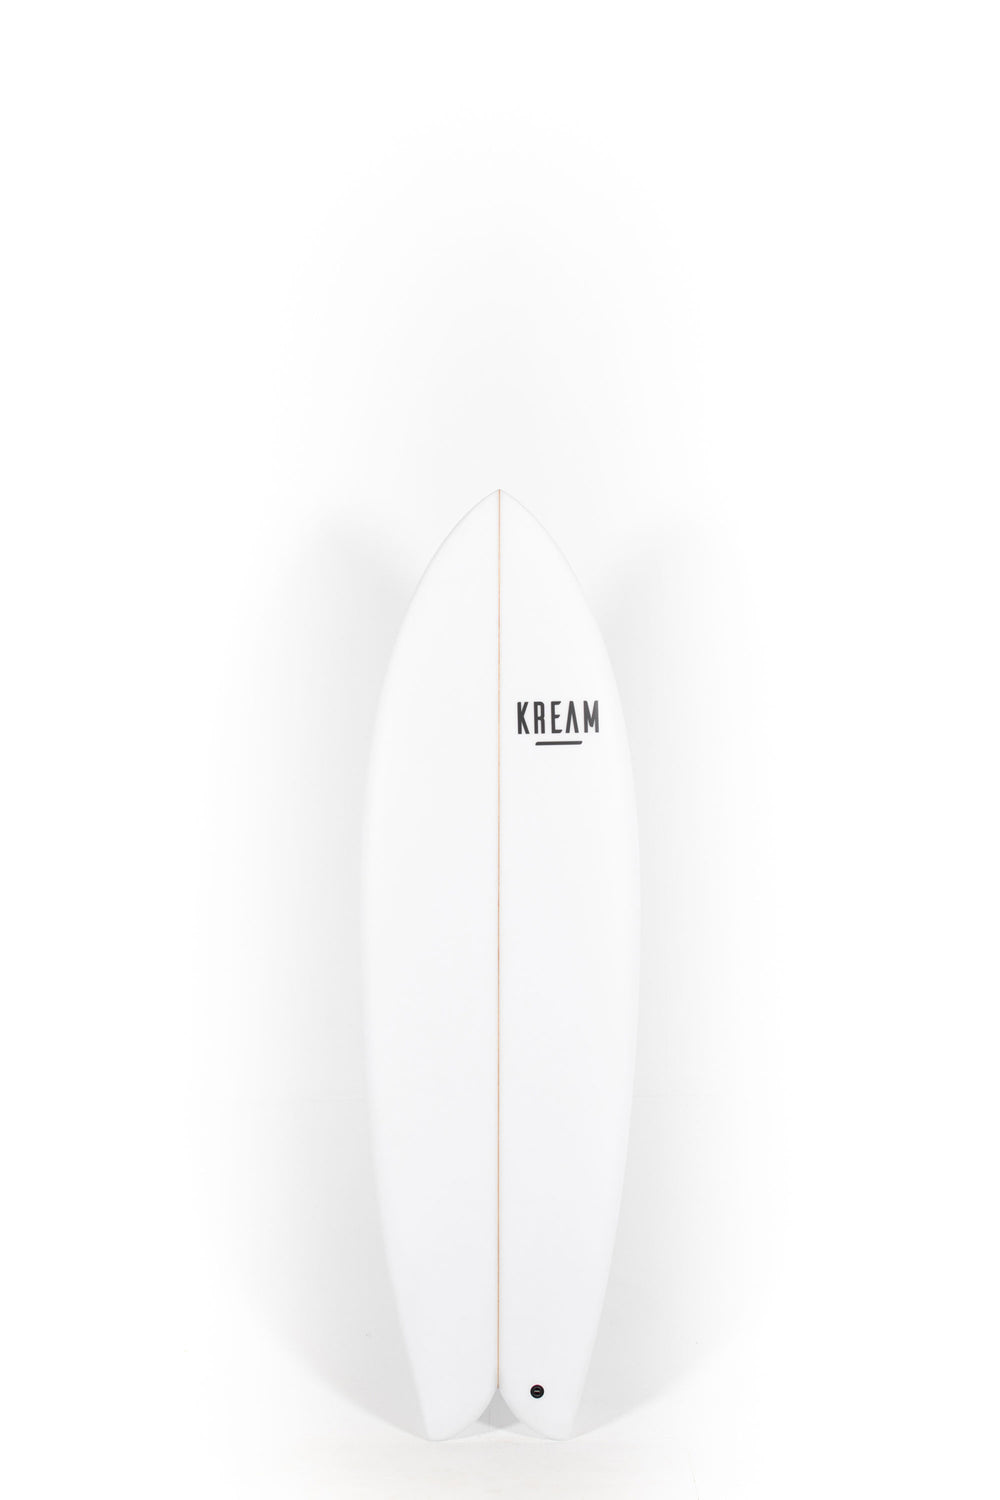 Pukas Surf Shop - Kream Surfboards - FISH - 5'10